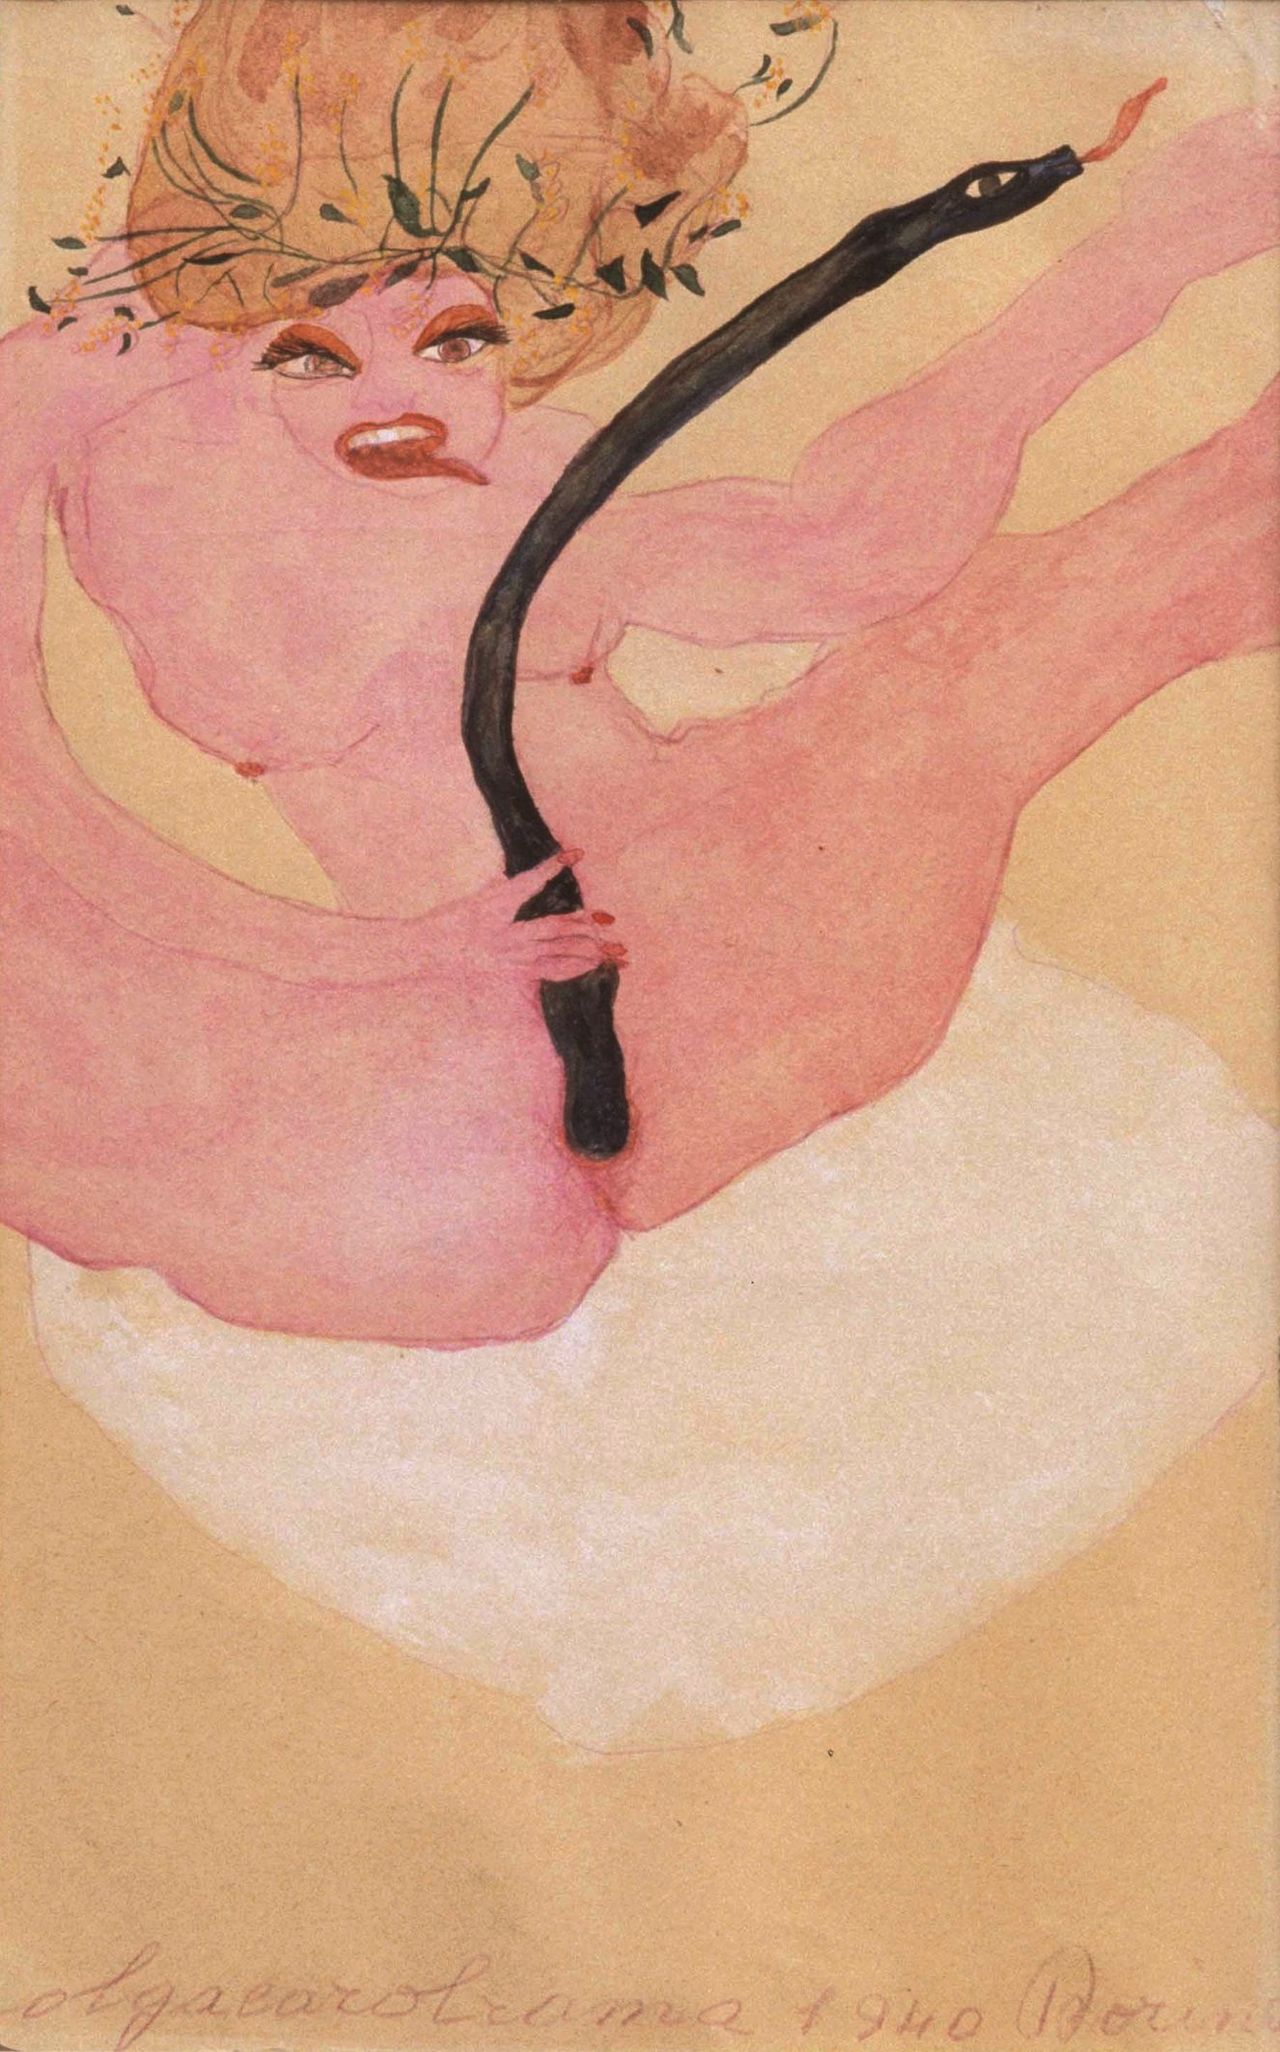 Carol Rama, "Dorina," 1940, watercolor on paper